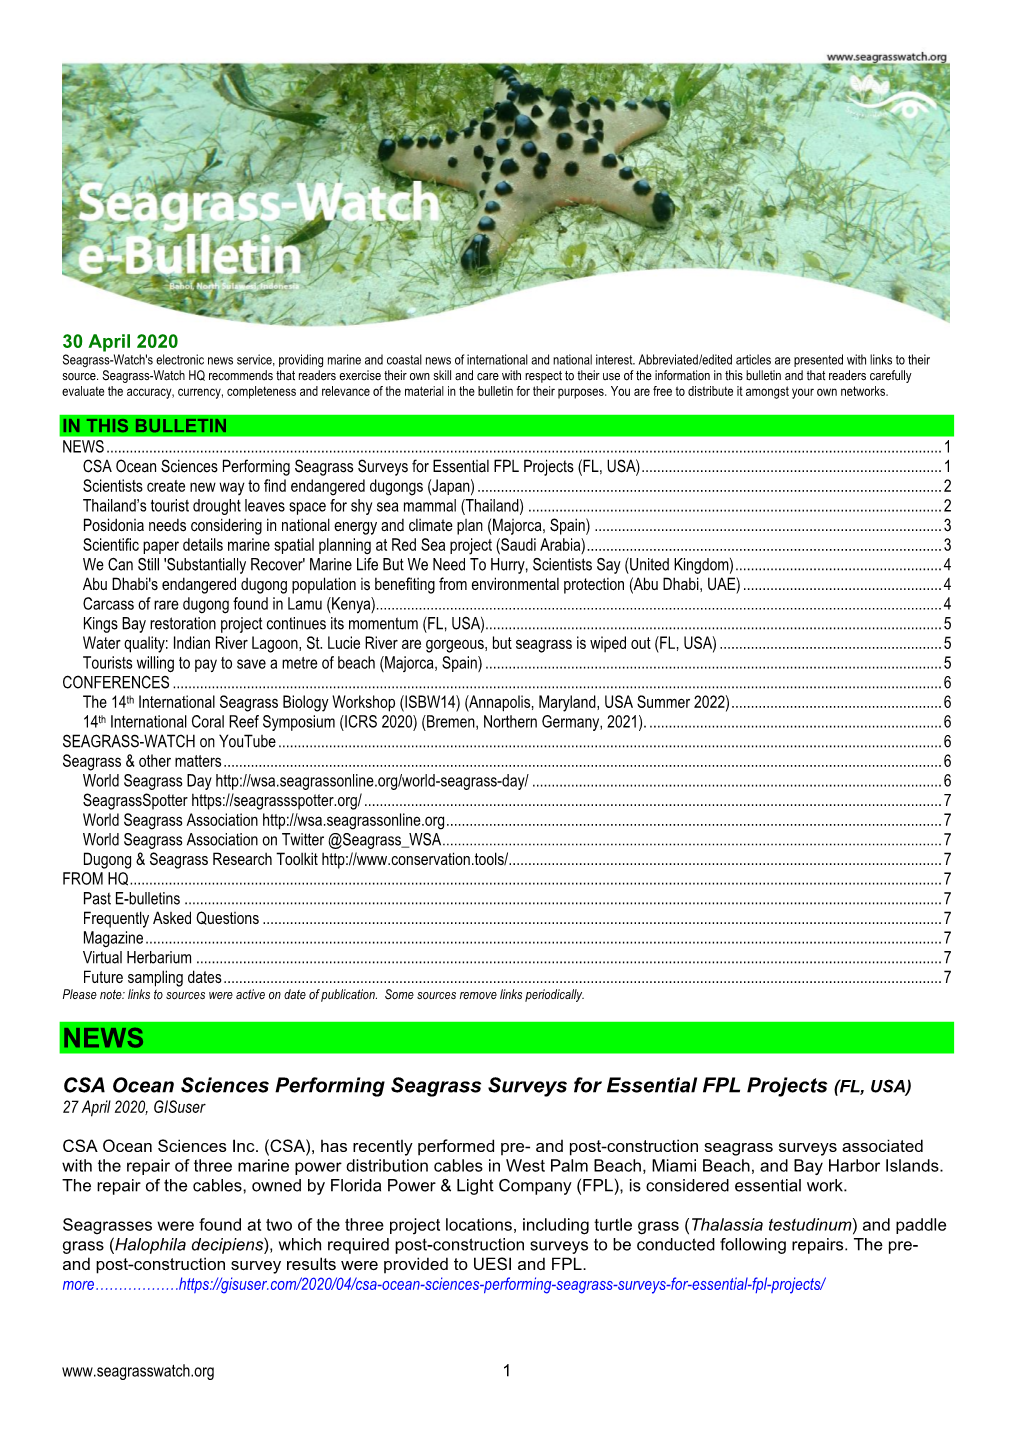 Seagrass-Watch E-Bulletin April 2020